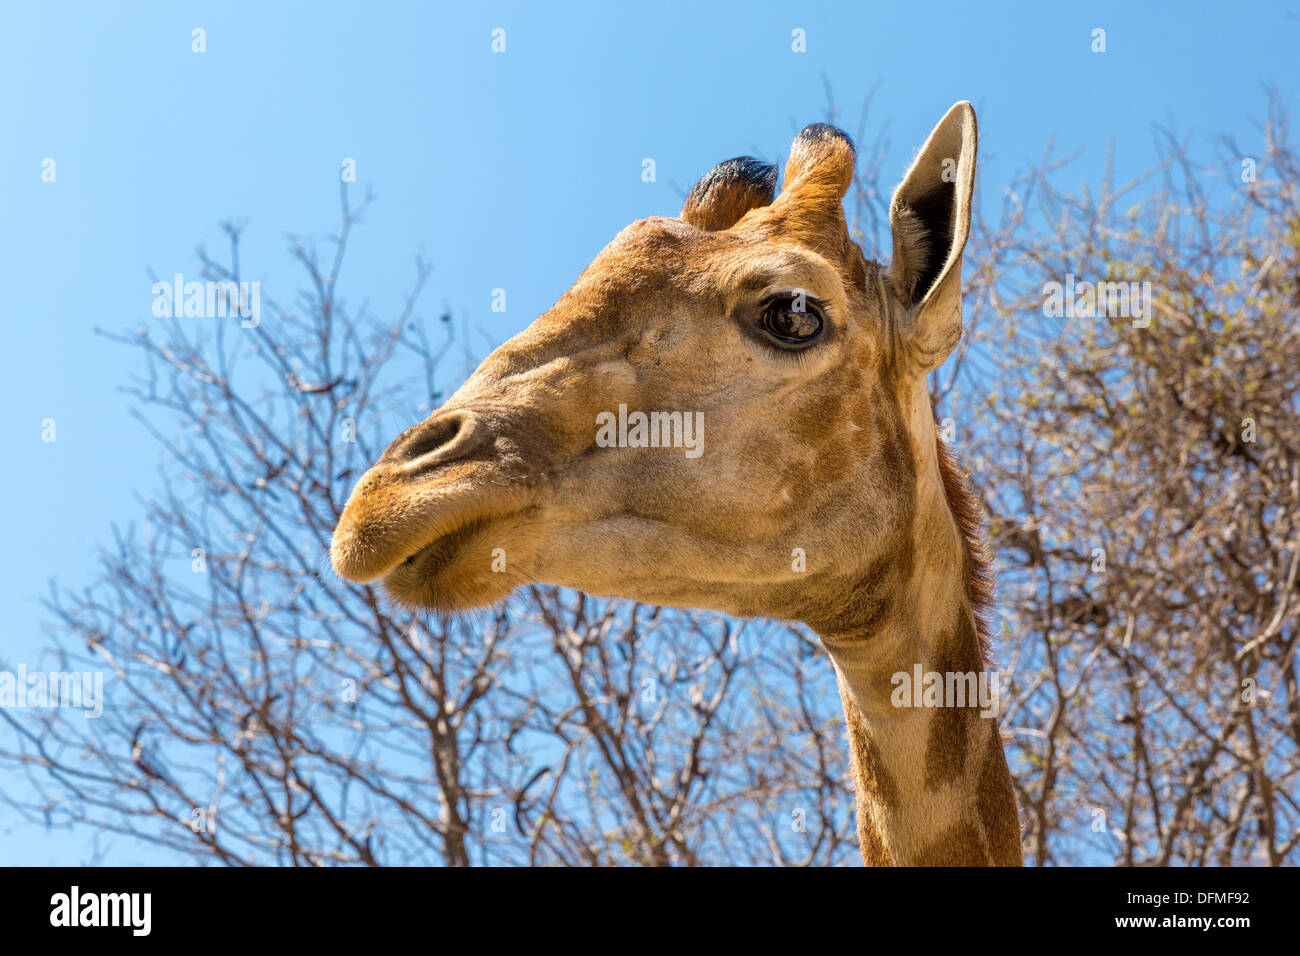 A closeup shot of the head of young giraffe Stock Photo